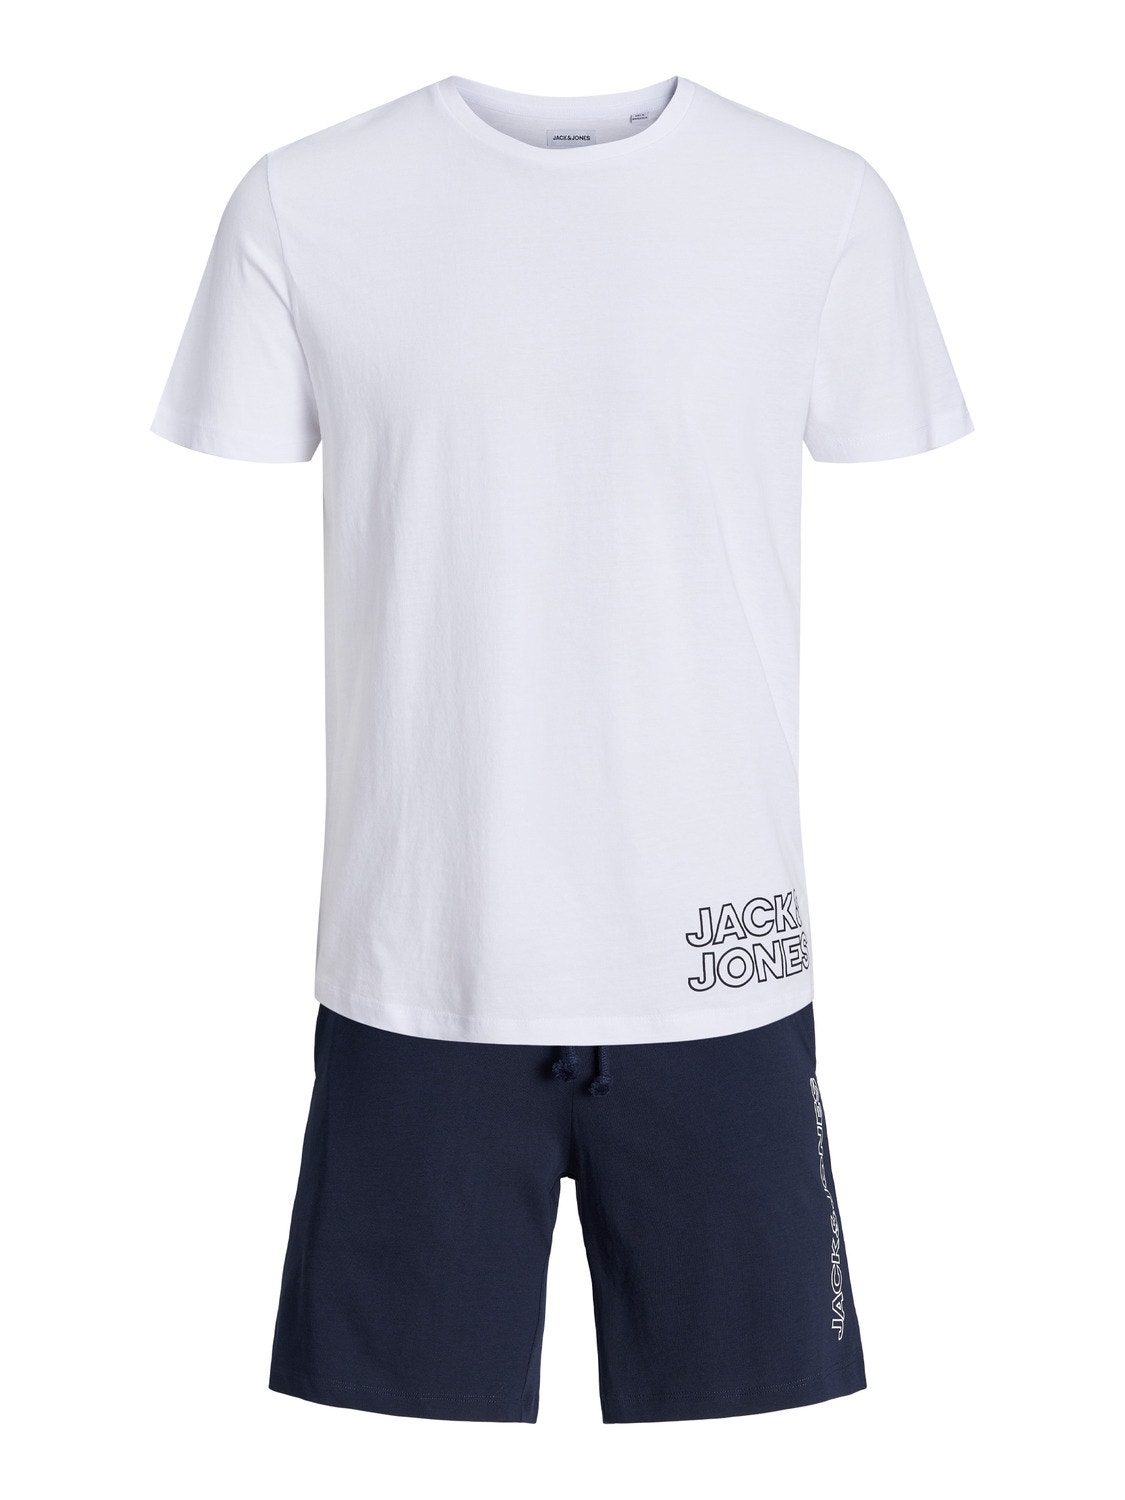 Jack & Jones Loungewear Logo Decote Redondo -White - 12245905